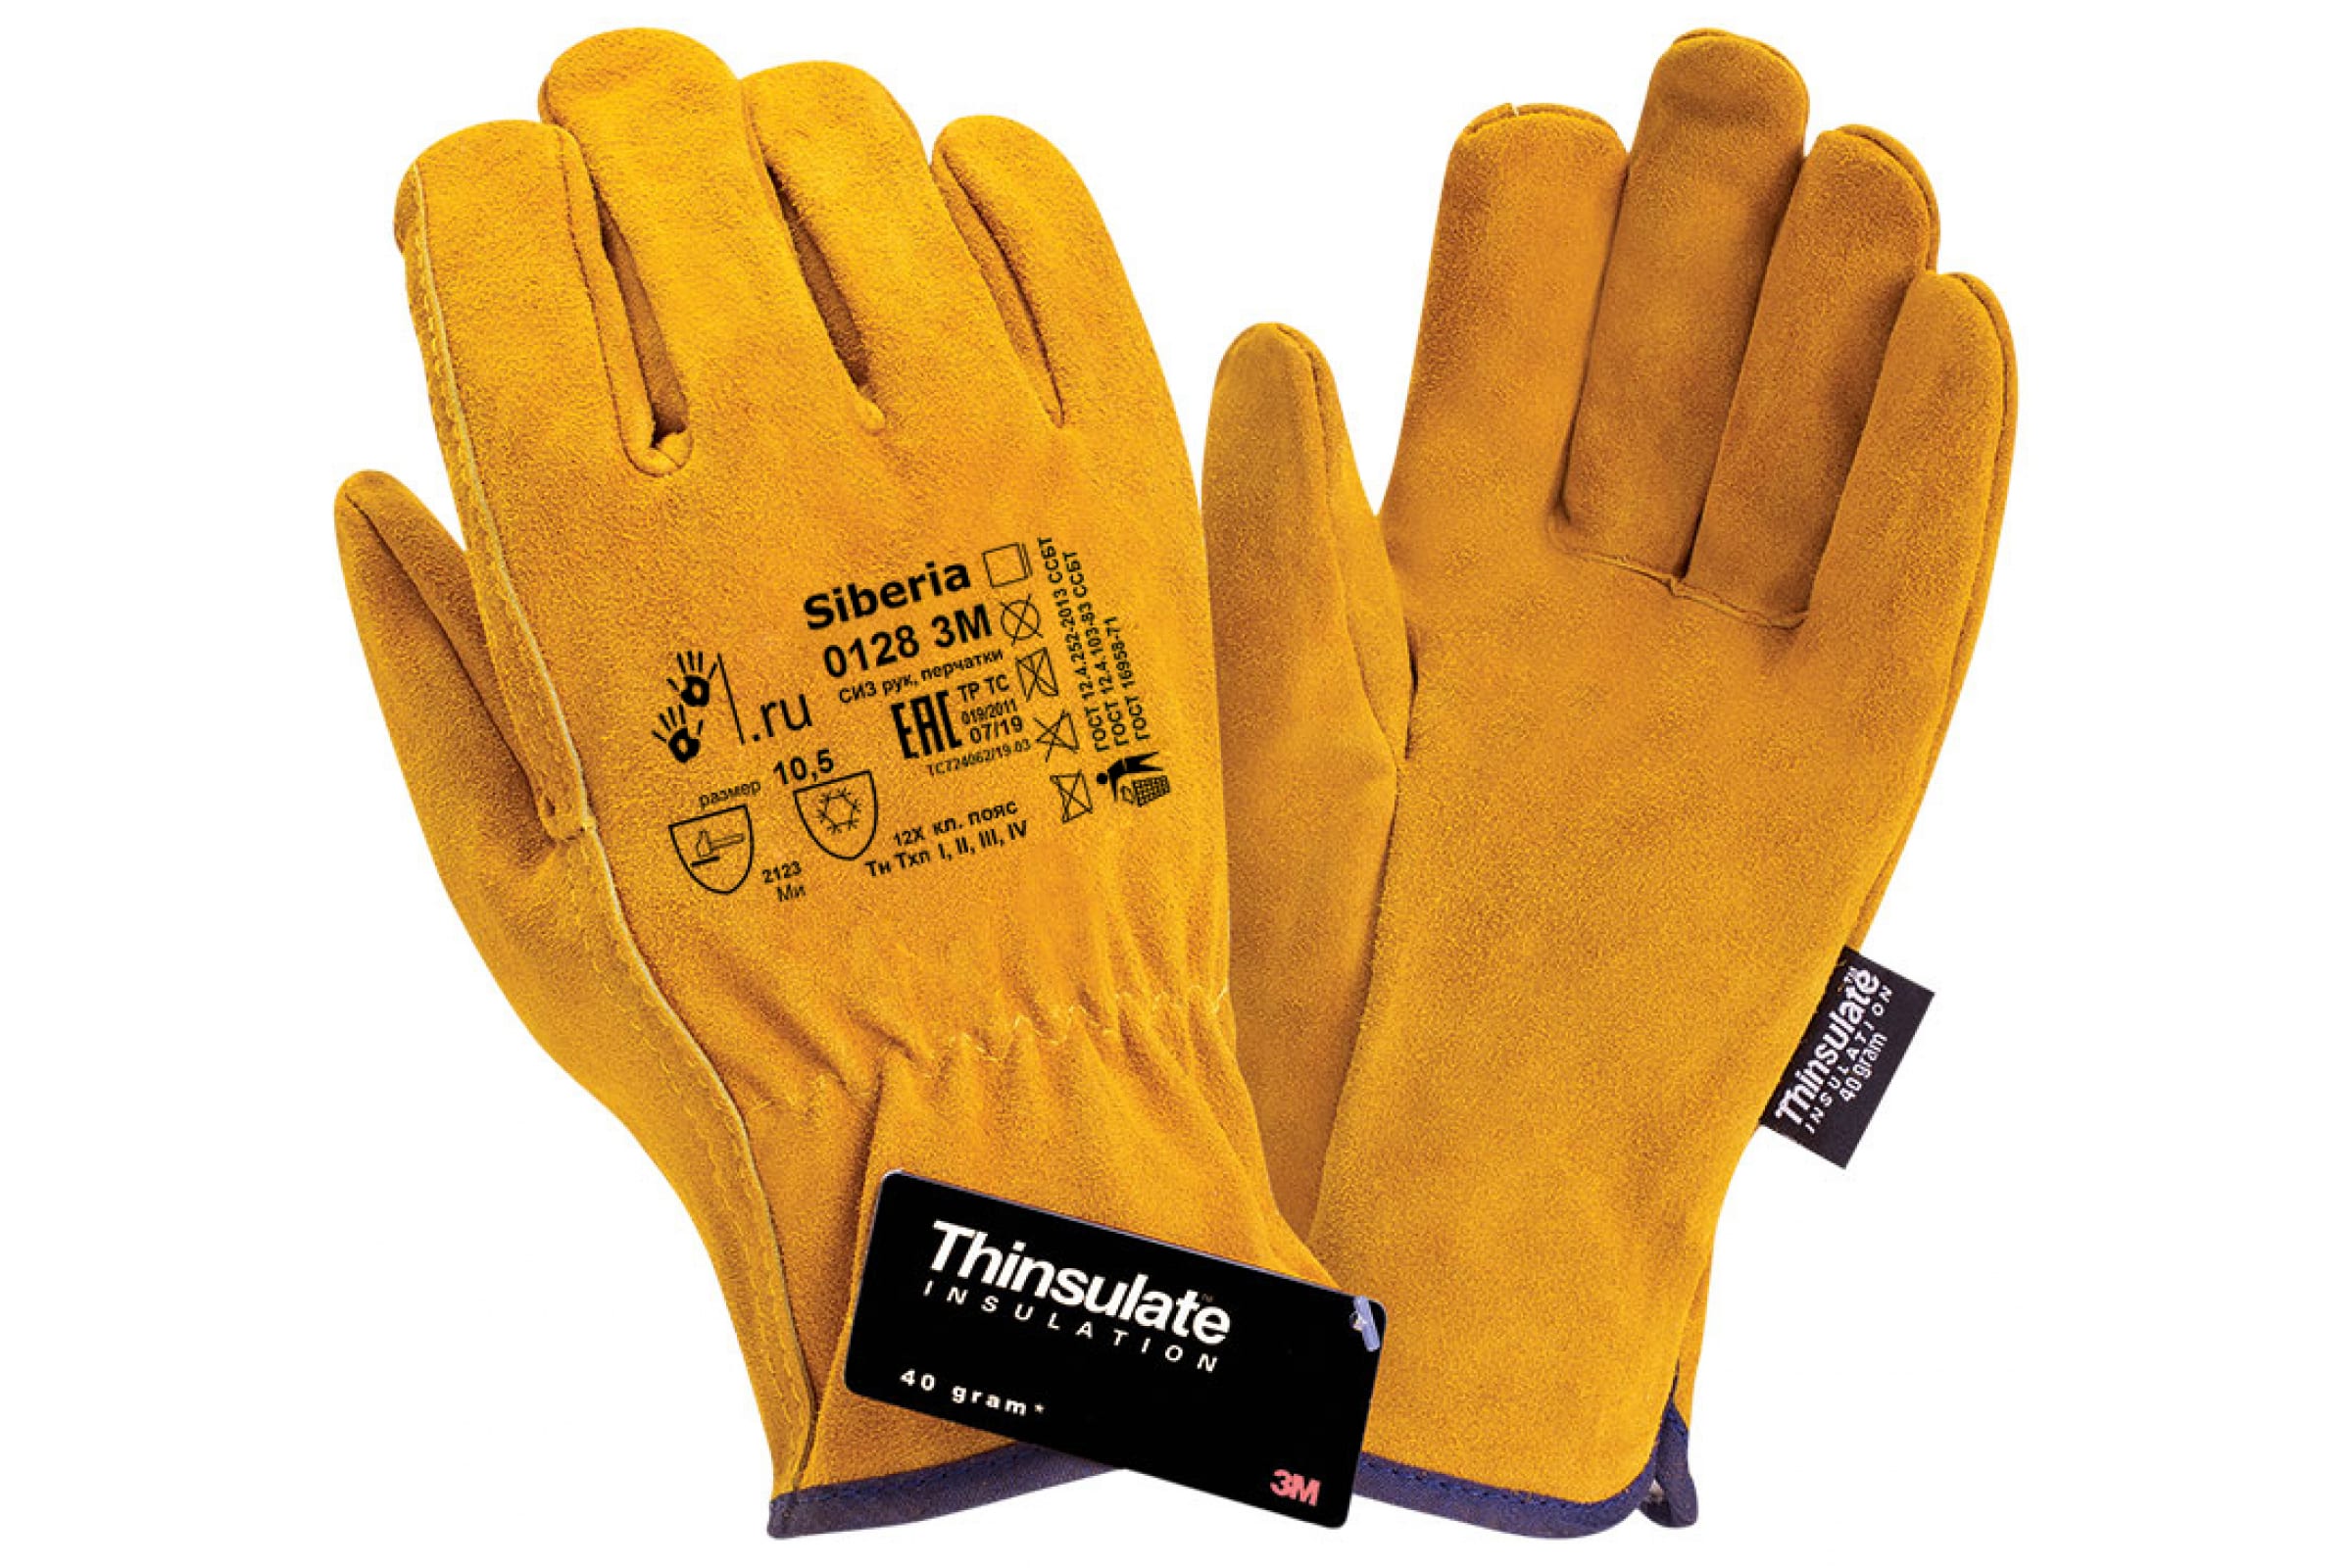 2Hands Перчатки утепленные, спилок КРС/Thinsulate 3М 0128 3M Siberia спилковые перчатки 2hands